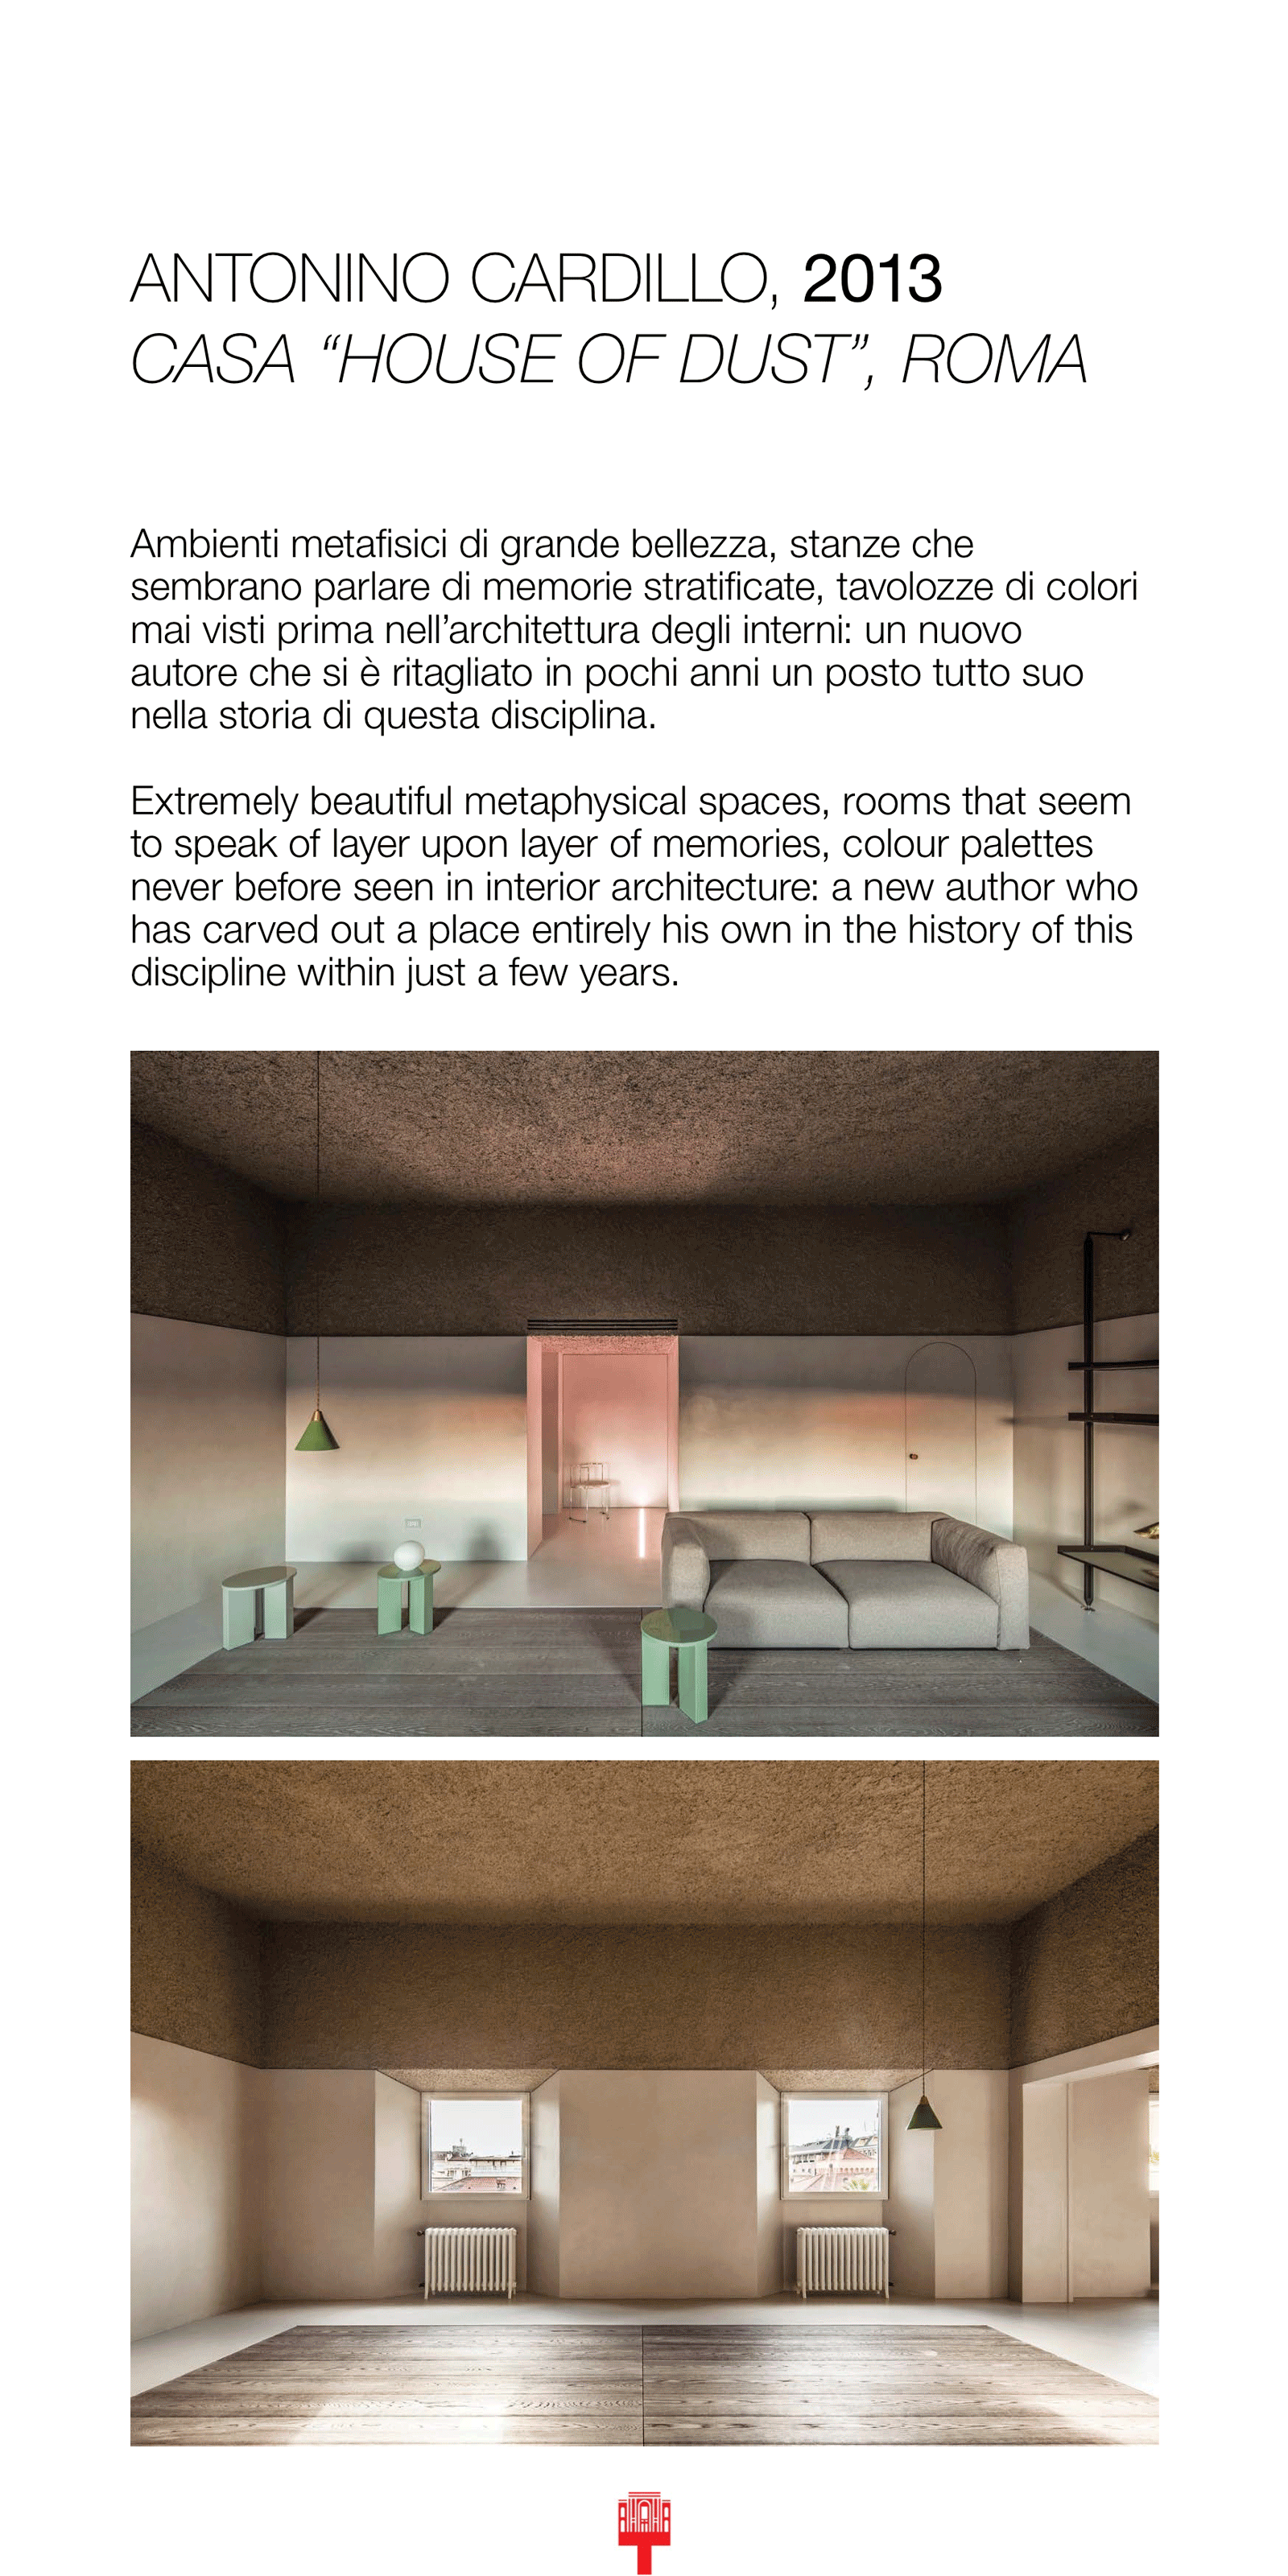 Beppe Finessi, ‘Antonino Cardillo, 2013: casa “House of Dust”, Roma’, Rooms. Novel Living Concepts [exhibition], XXI Triennale, Palazzo dell’Arte, Milan, 2 Apr.–12 Sept. 2016.